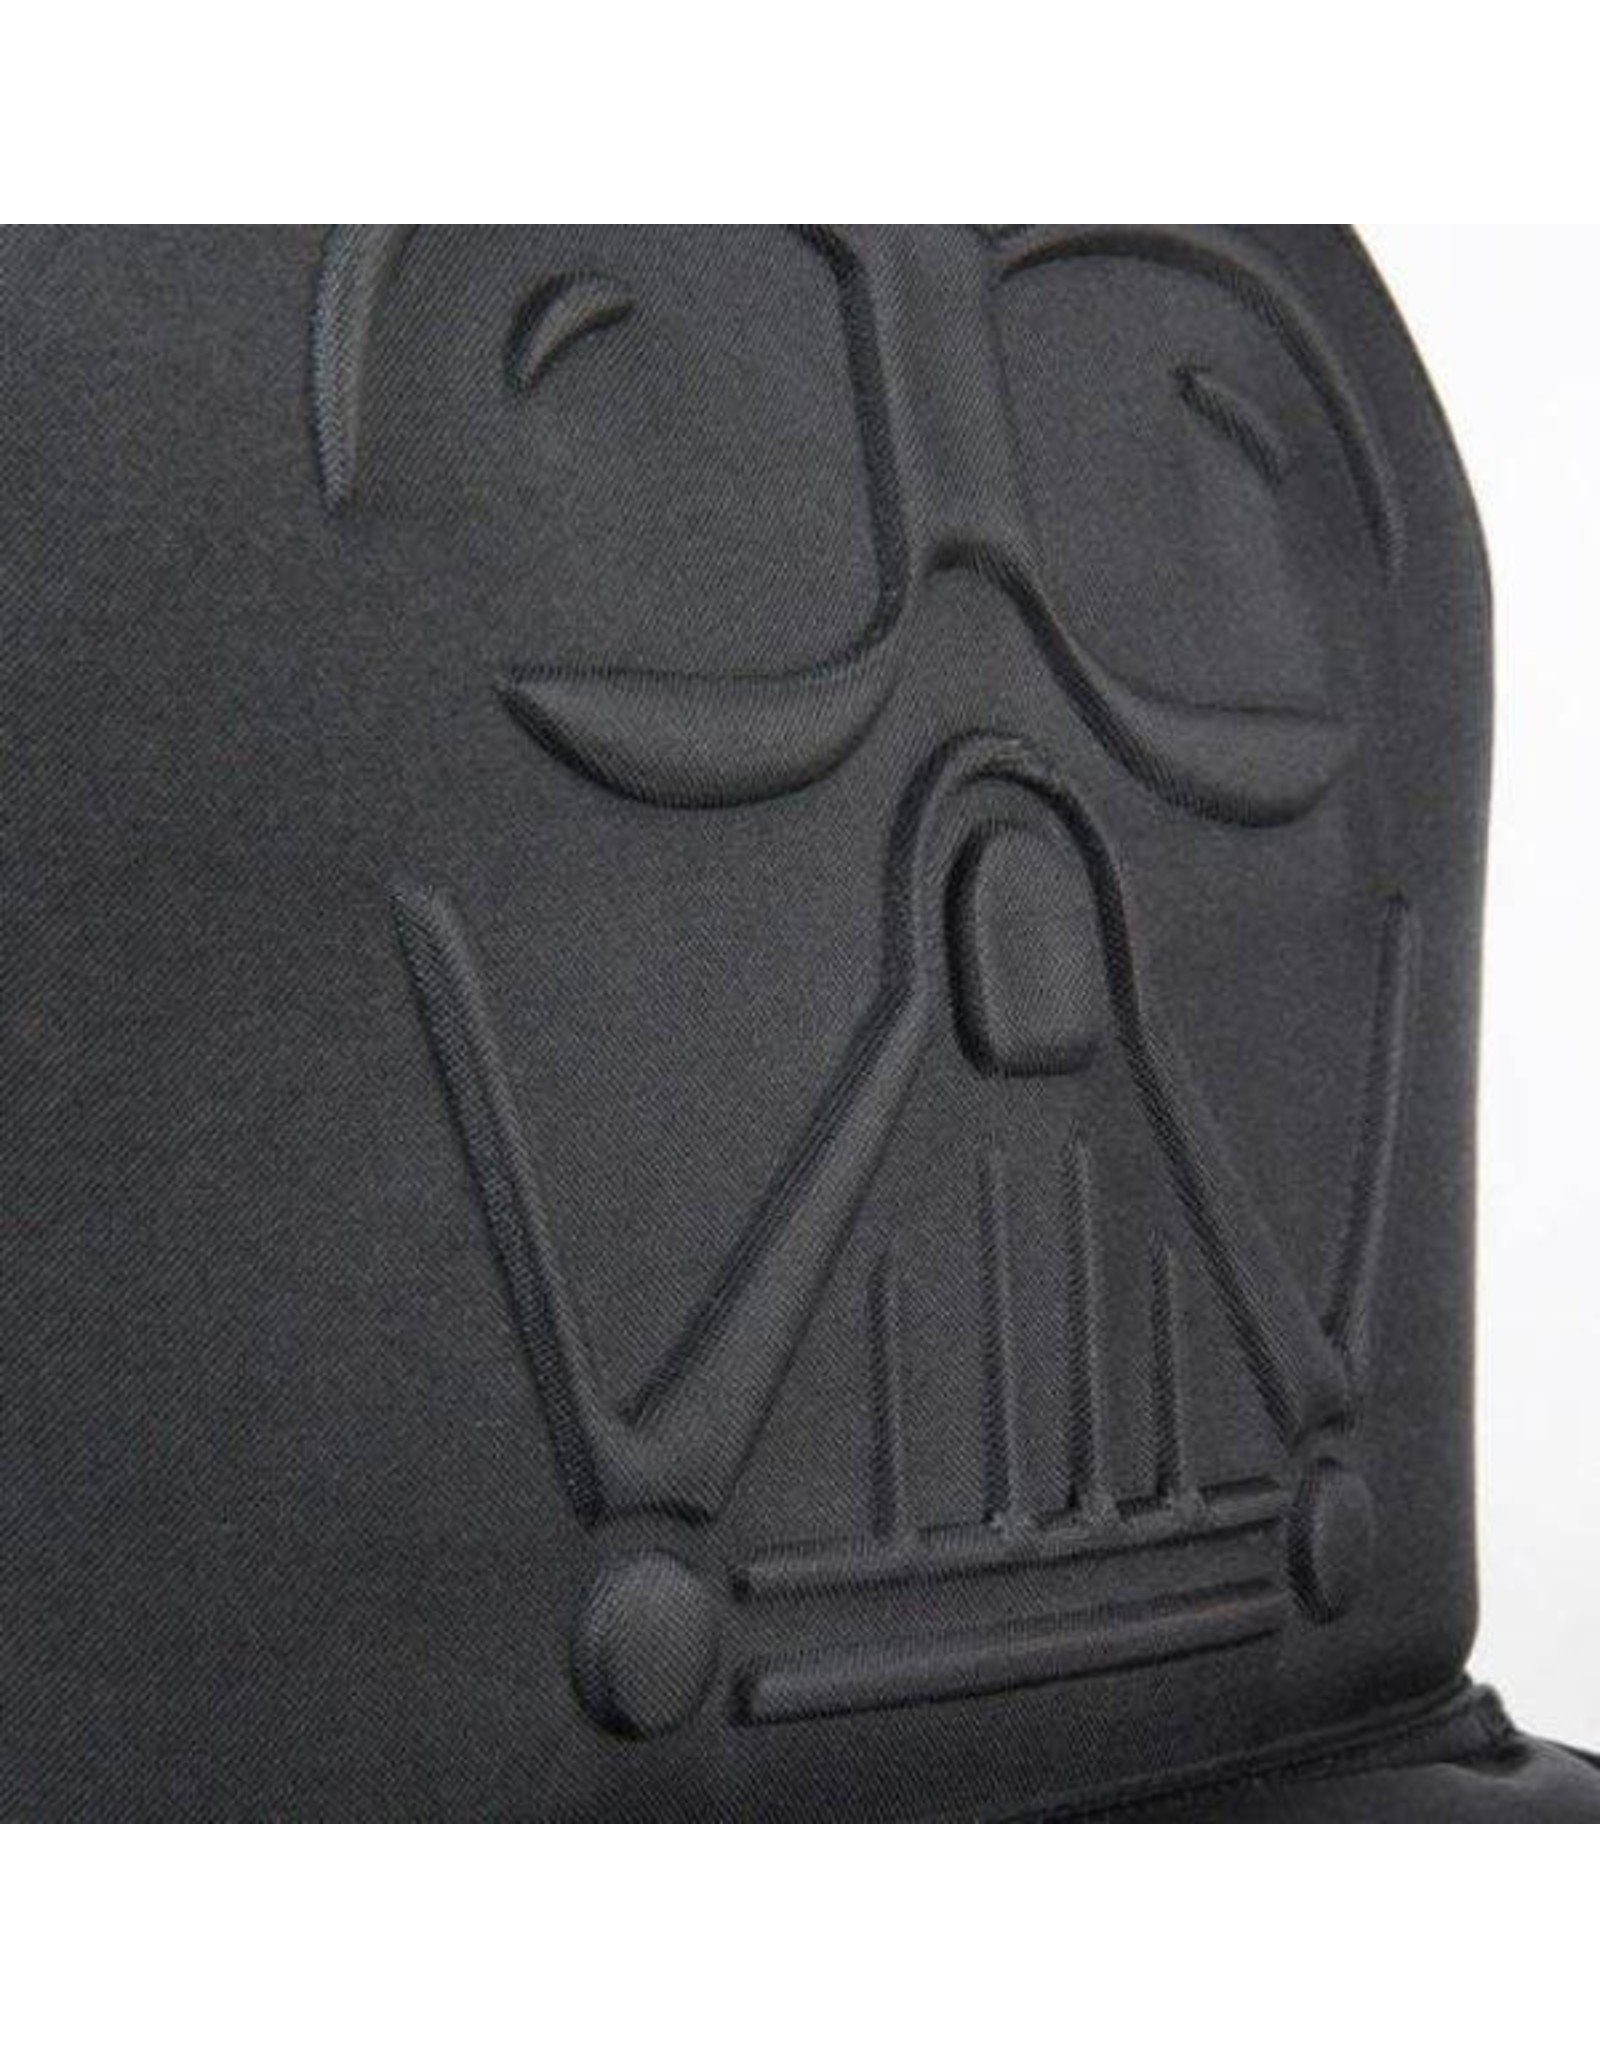 Star Wars Star Wars bags - Star Wars backpack Darth Vader 3D